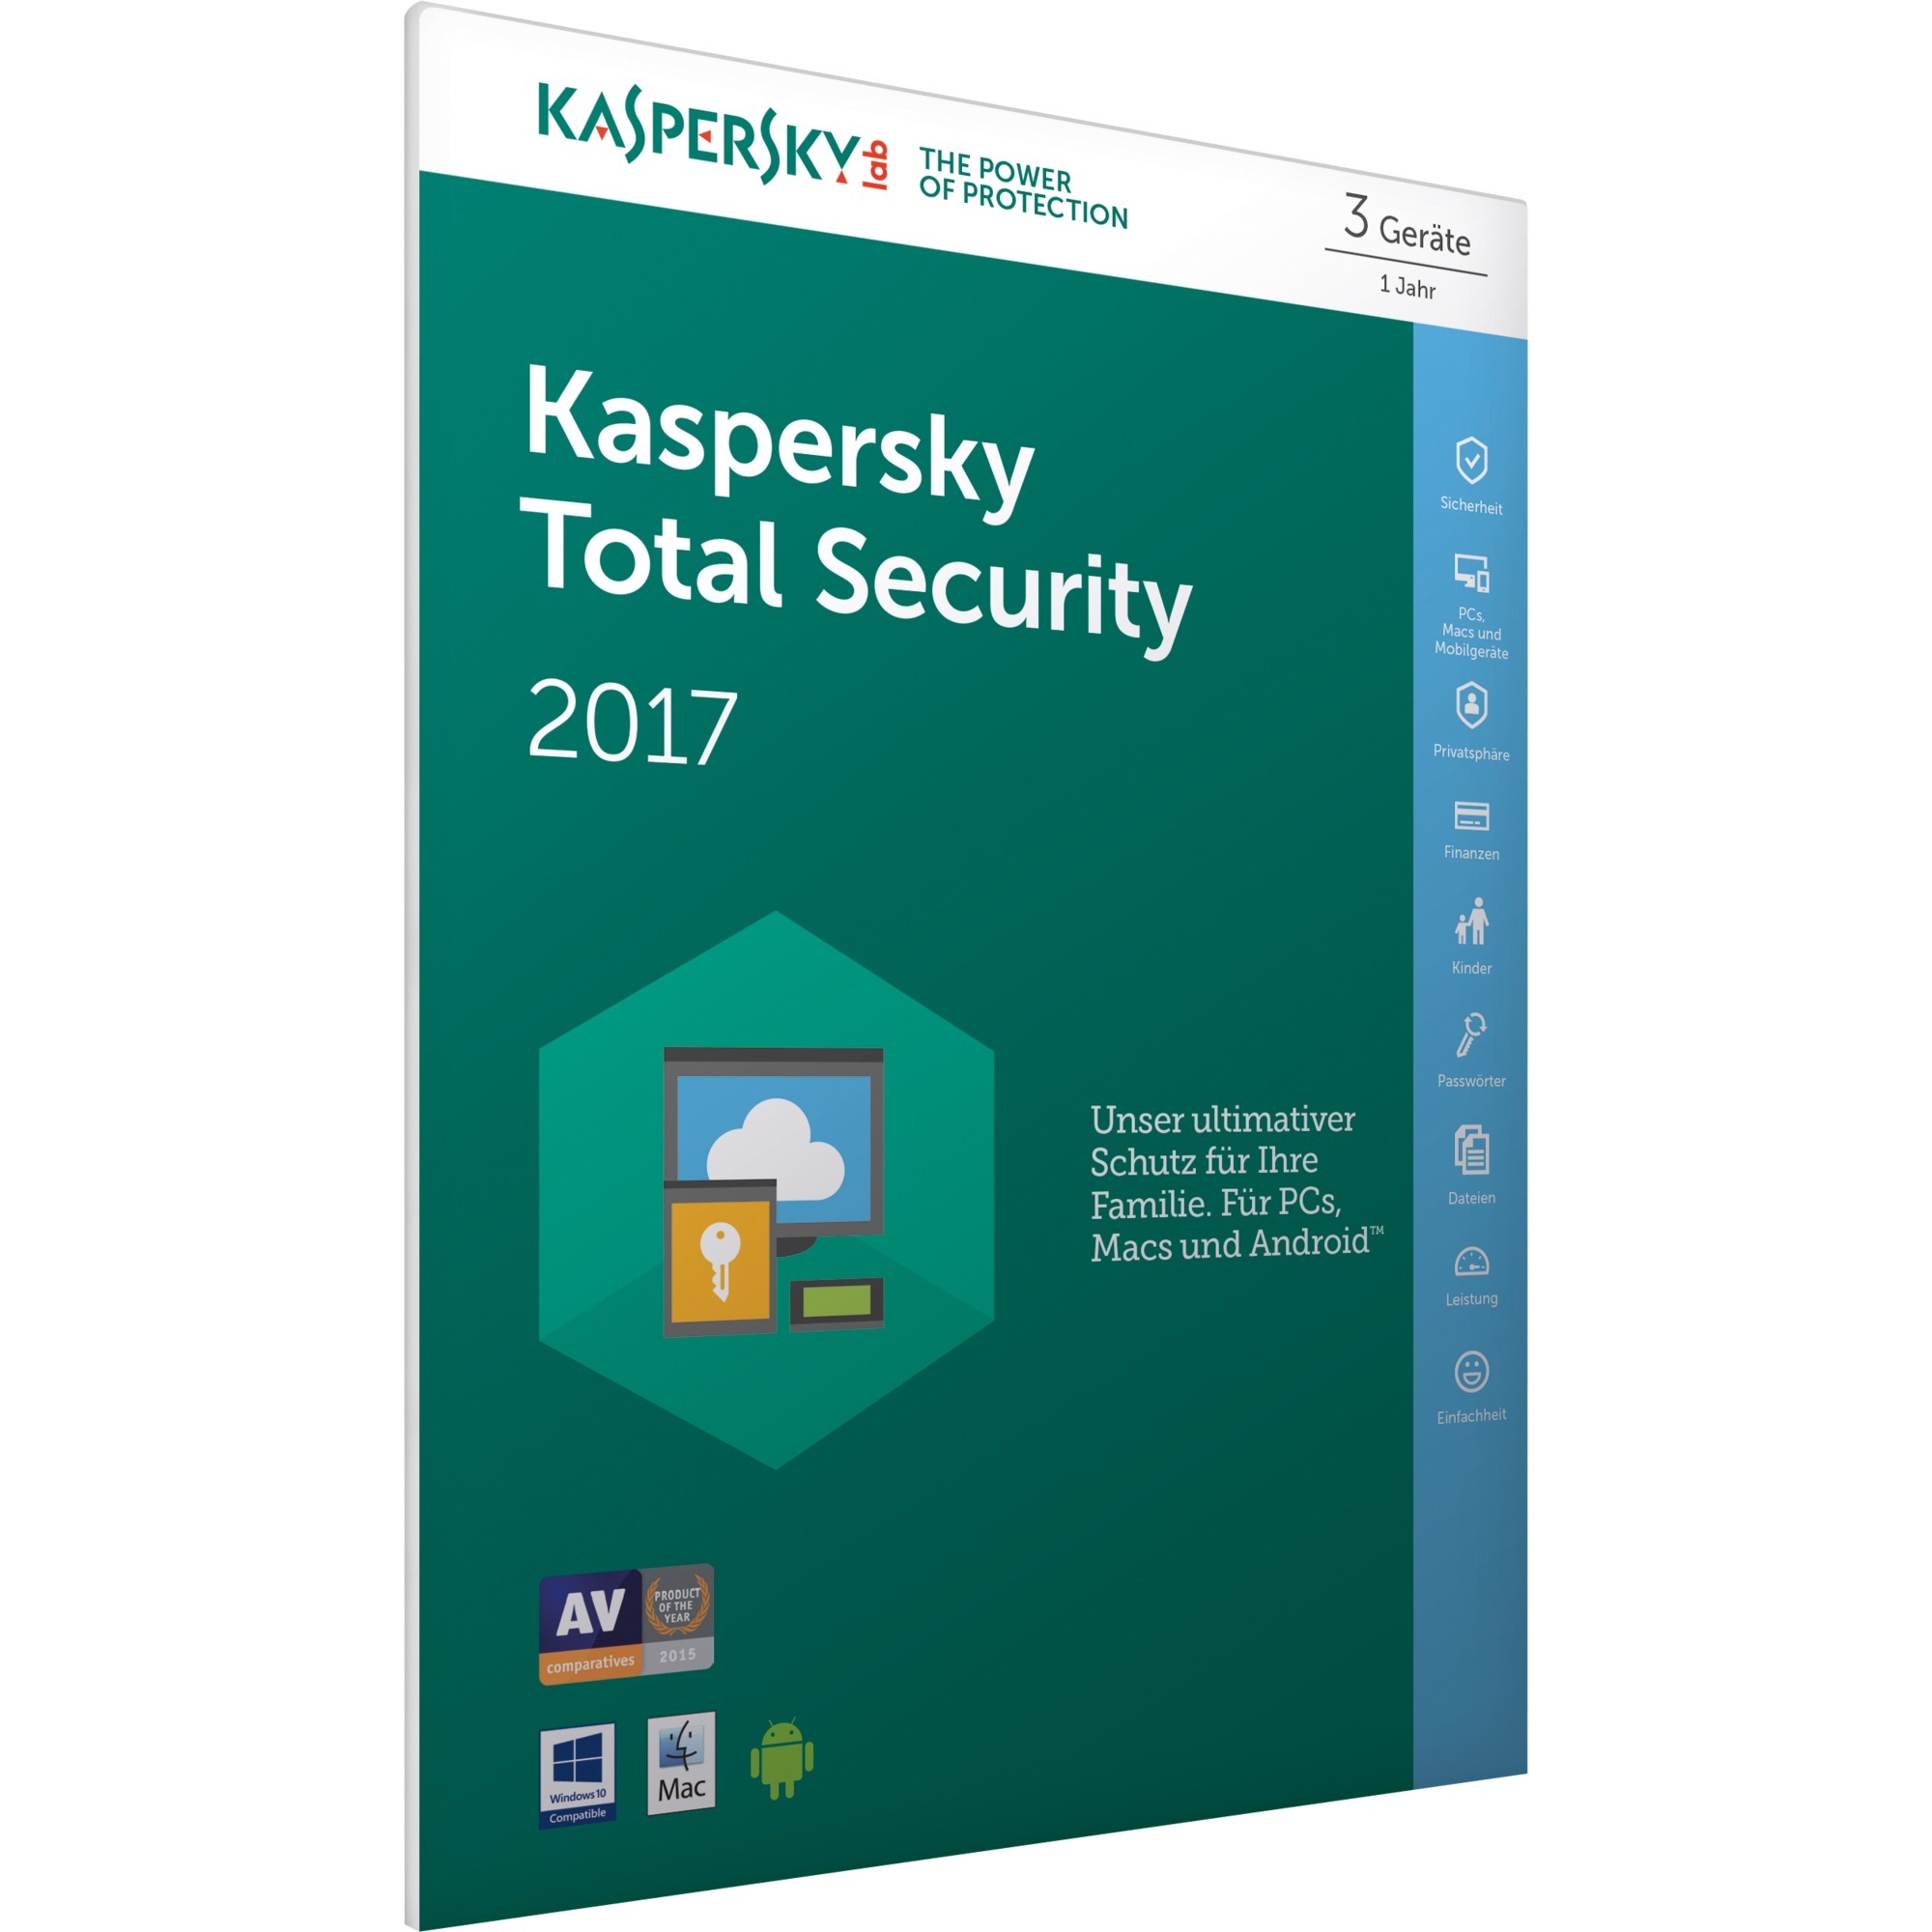 Kaspersky 2012 & trial reset v1.1c bypass